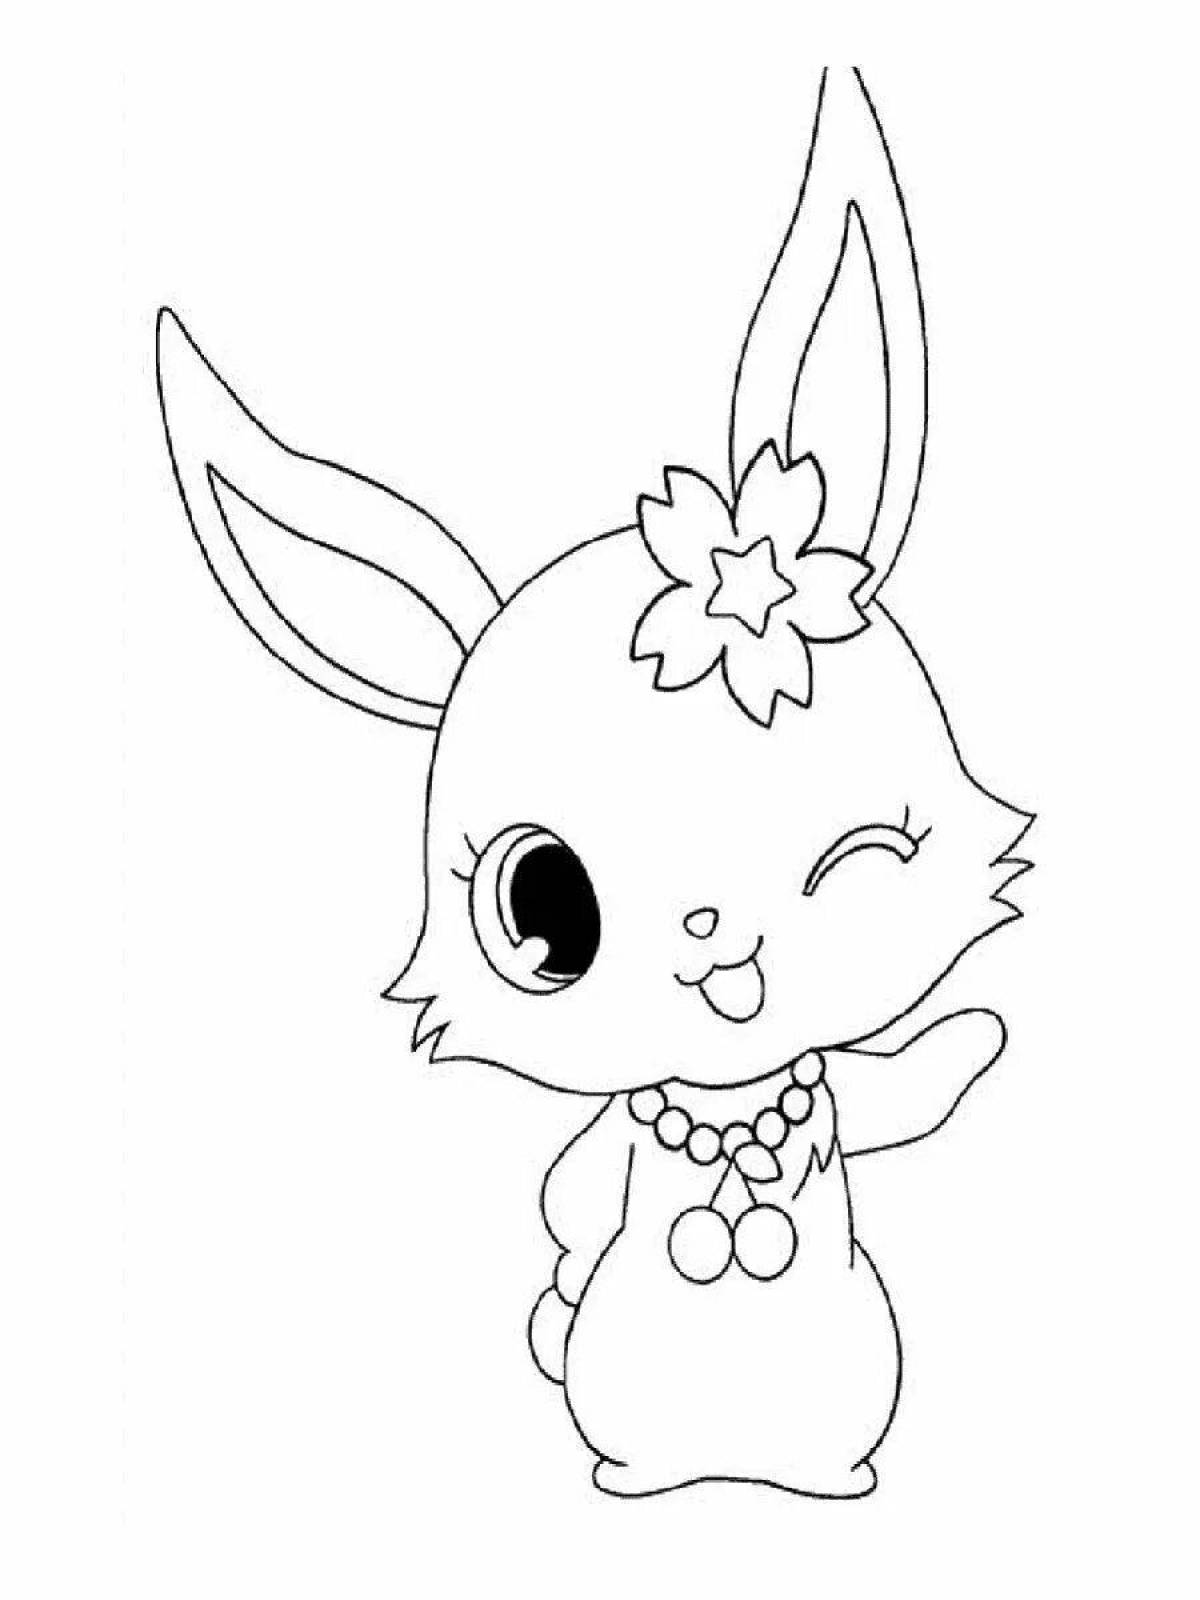 Little rabbit coloring page